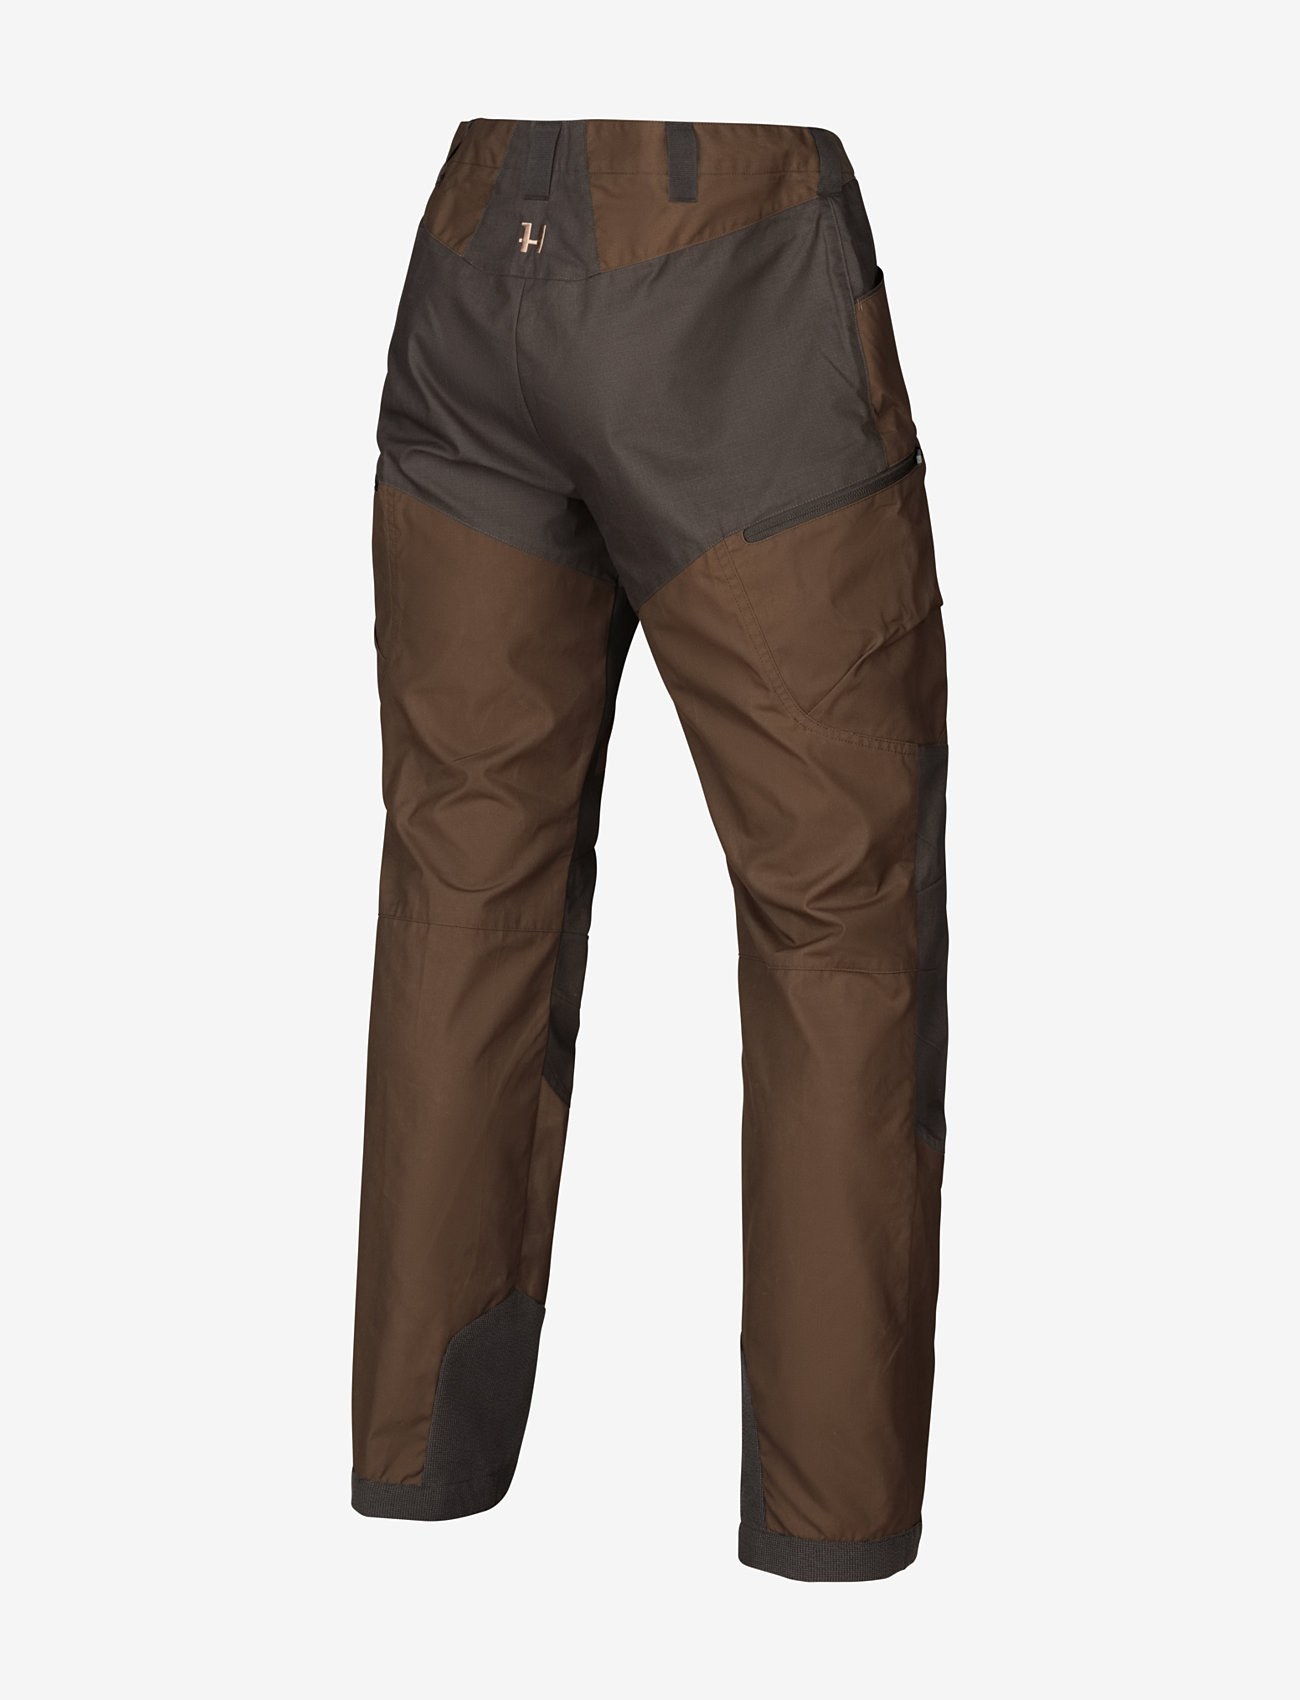 Härkila - Hermod trousers - slate brown/shadow grey - 1